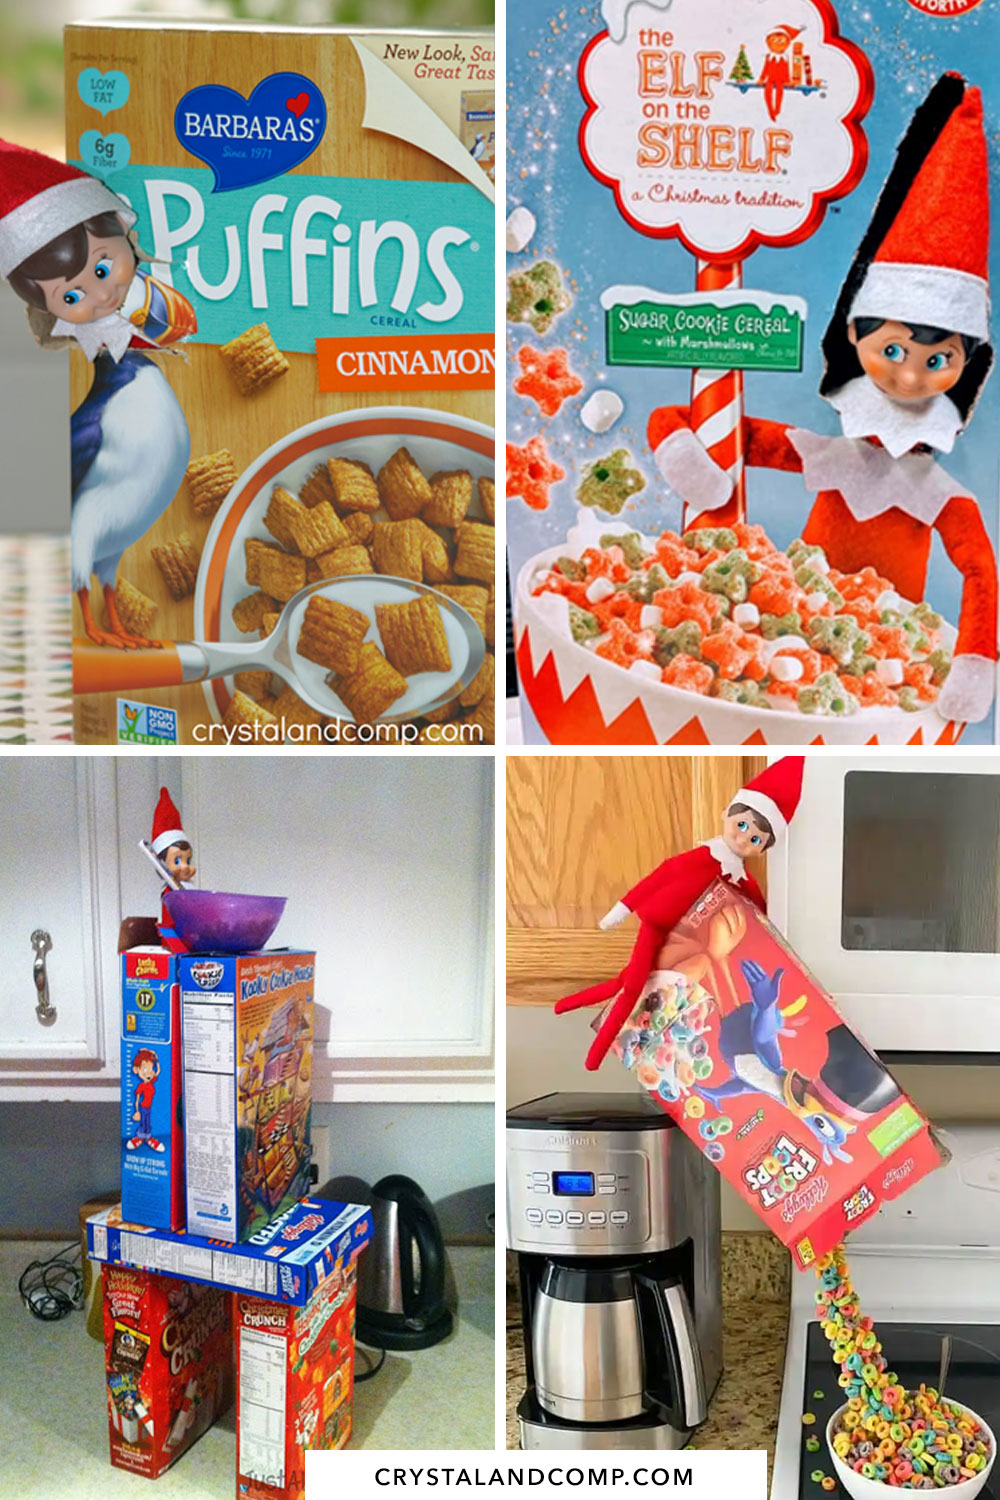 Elf on the Shelf Cereal Box Ideas